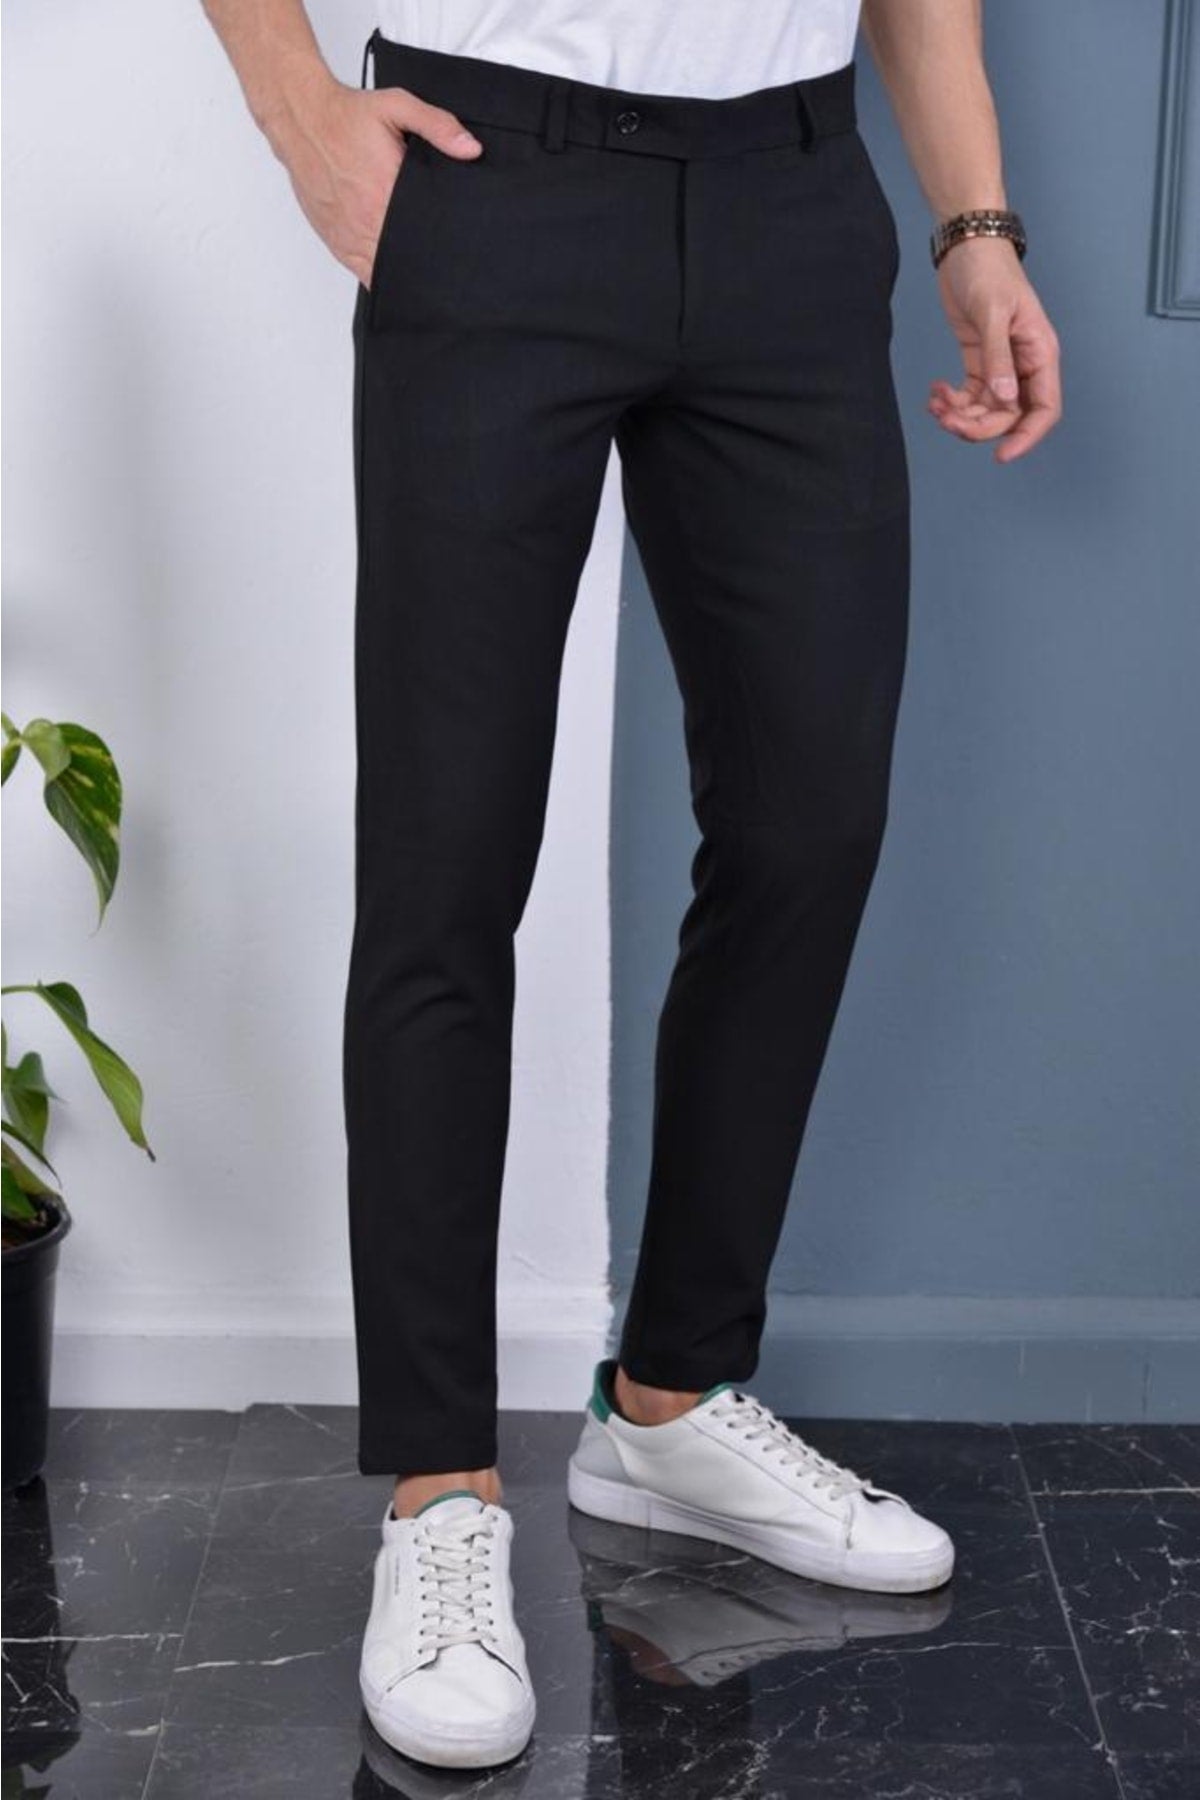 Men's Black Color Italian Cut Quality Flexible Lycra Ankle Length Fabric Trousers